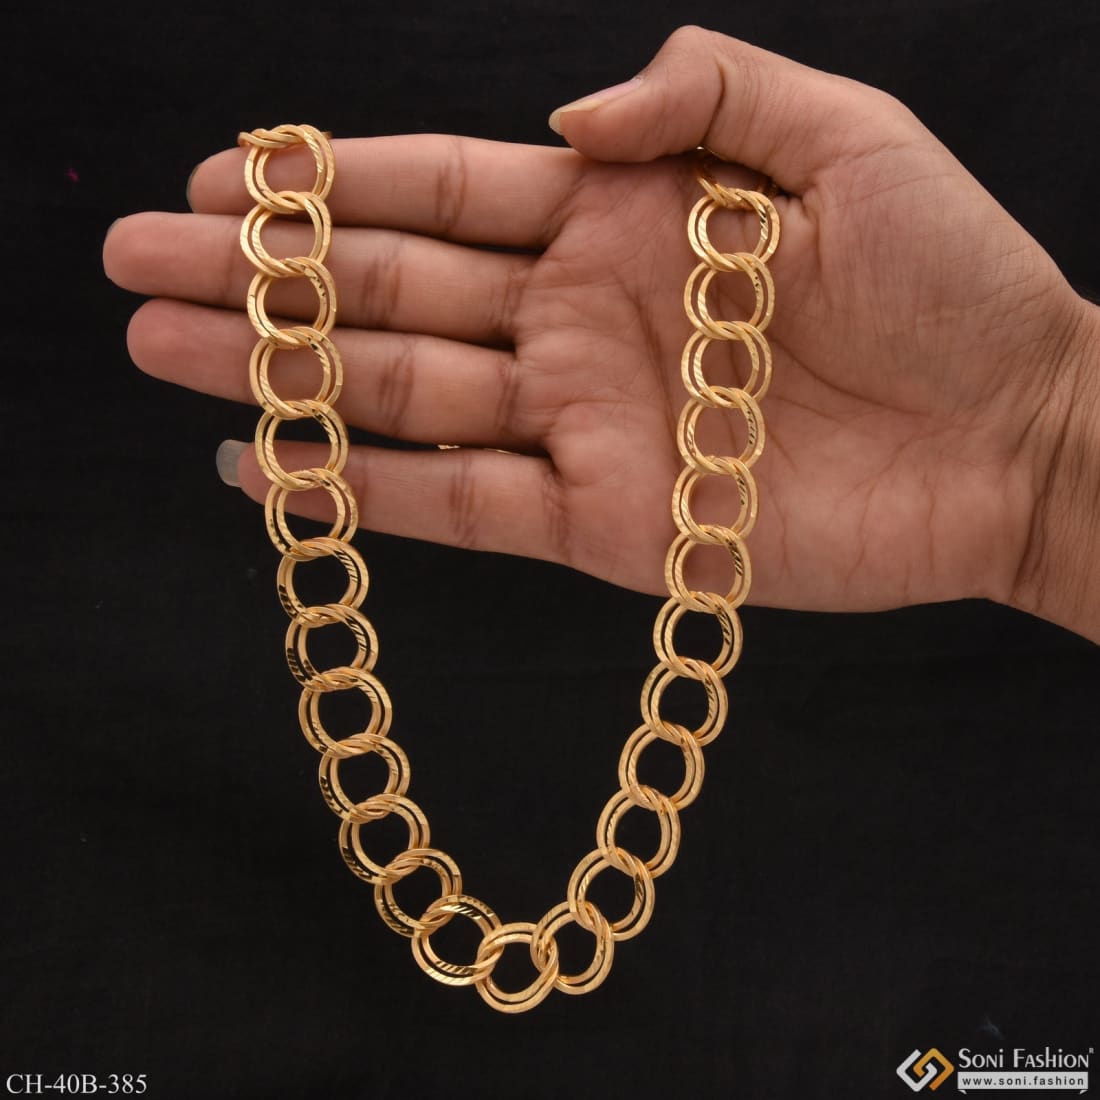 Ring Into Ring Best Quality Elegant Design Gold Plated Chain For Men -  Style C503, सोना चढ़ाया चेन - Soni Fashion, Rajkot | ID: 2851122648097